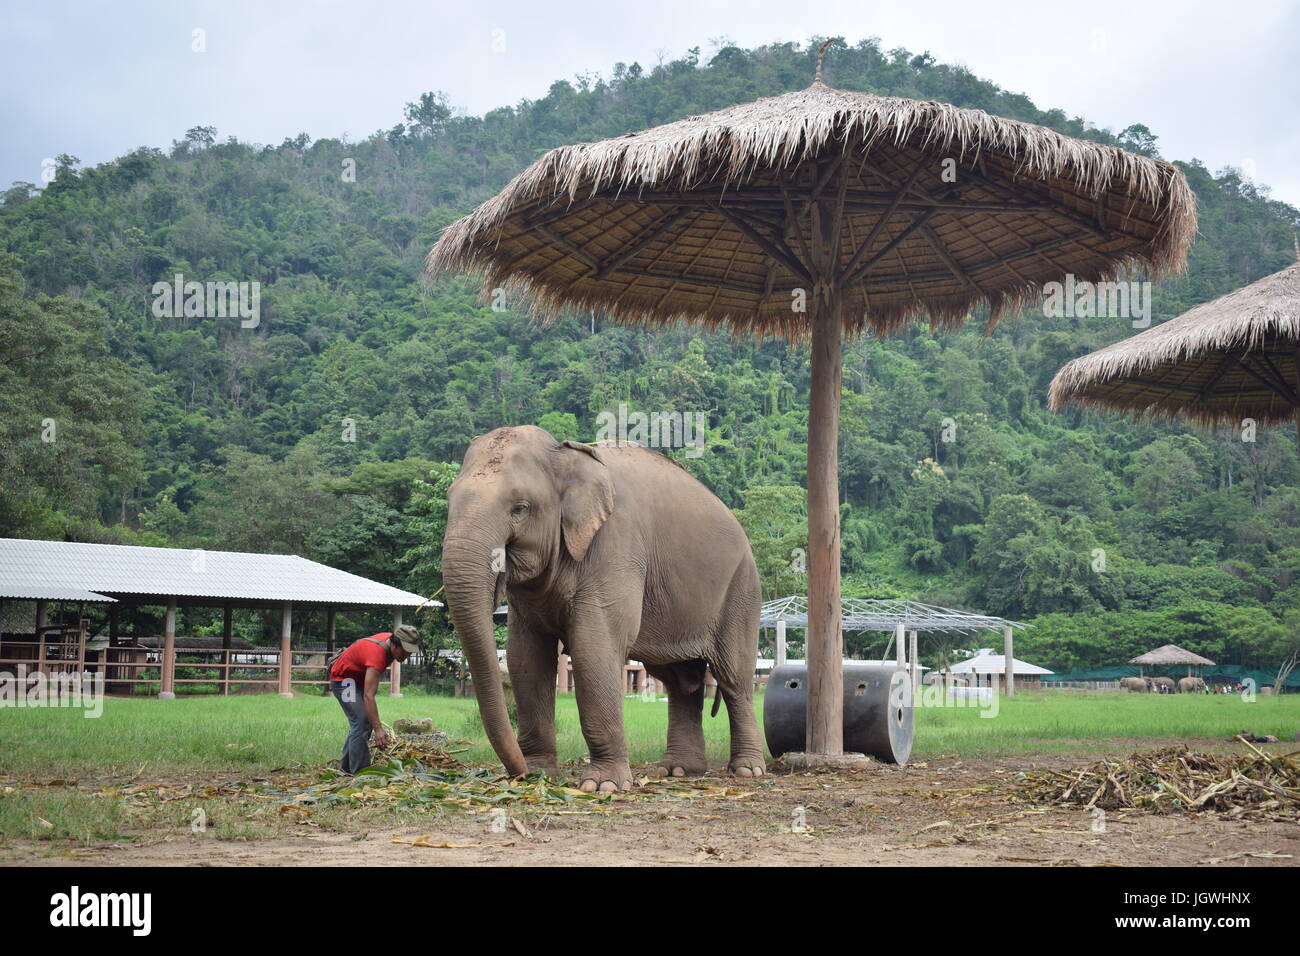 Elephant in Elephant Rescue Park Stock Photo